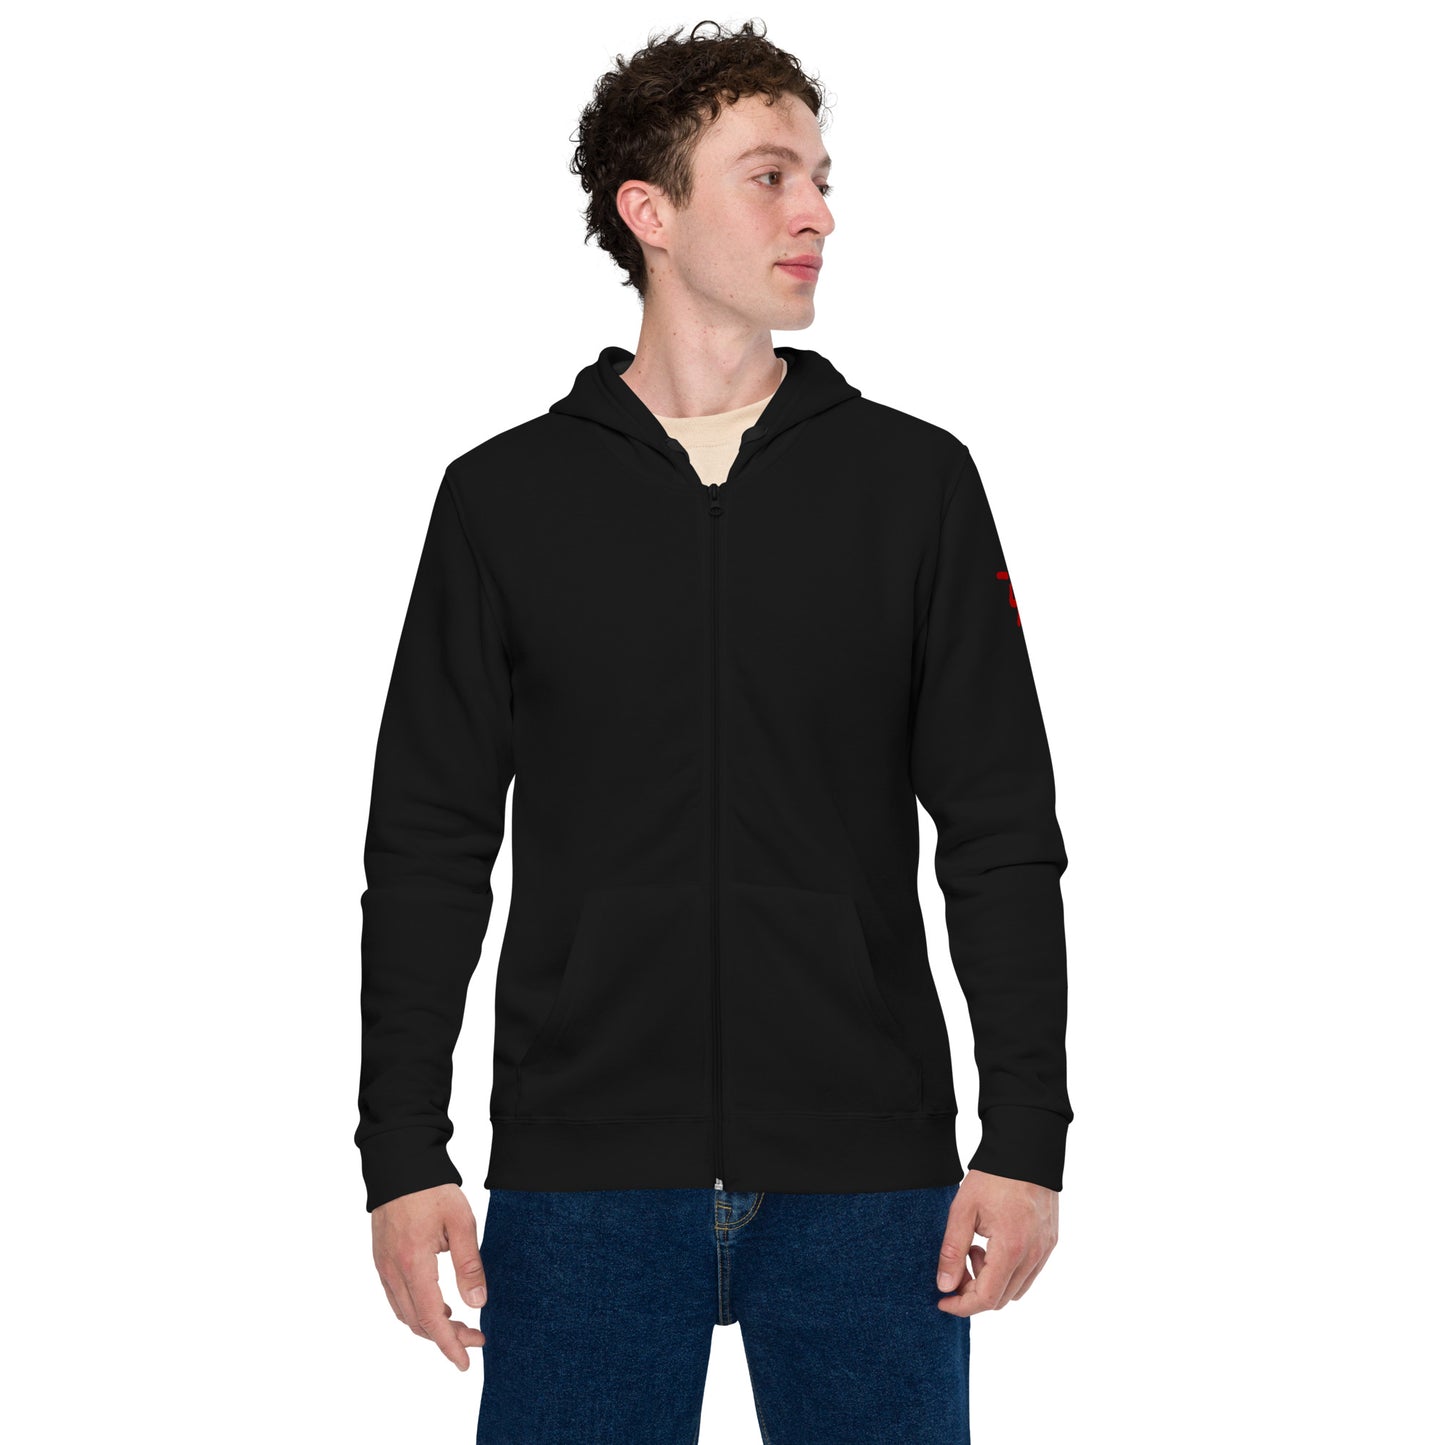 Columbine Unisex basic zip hoodie